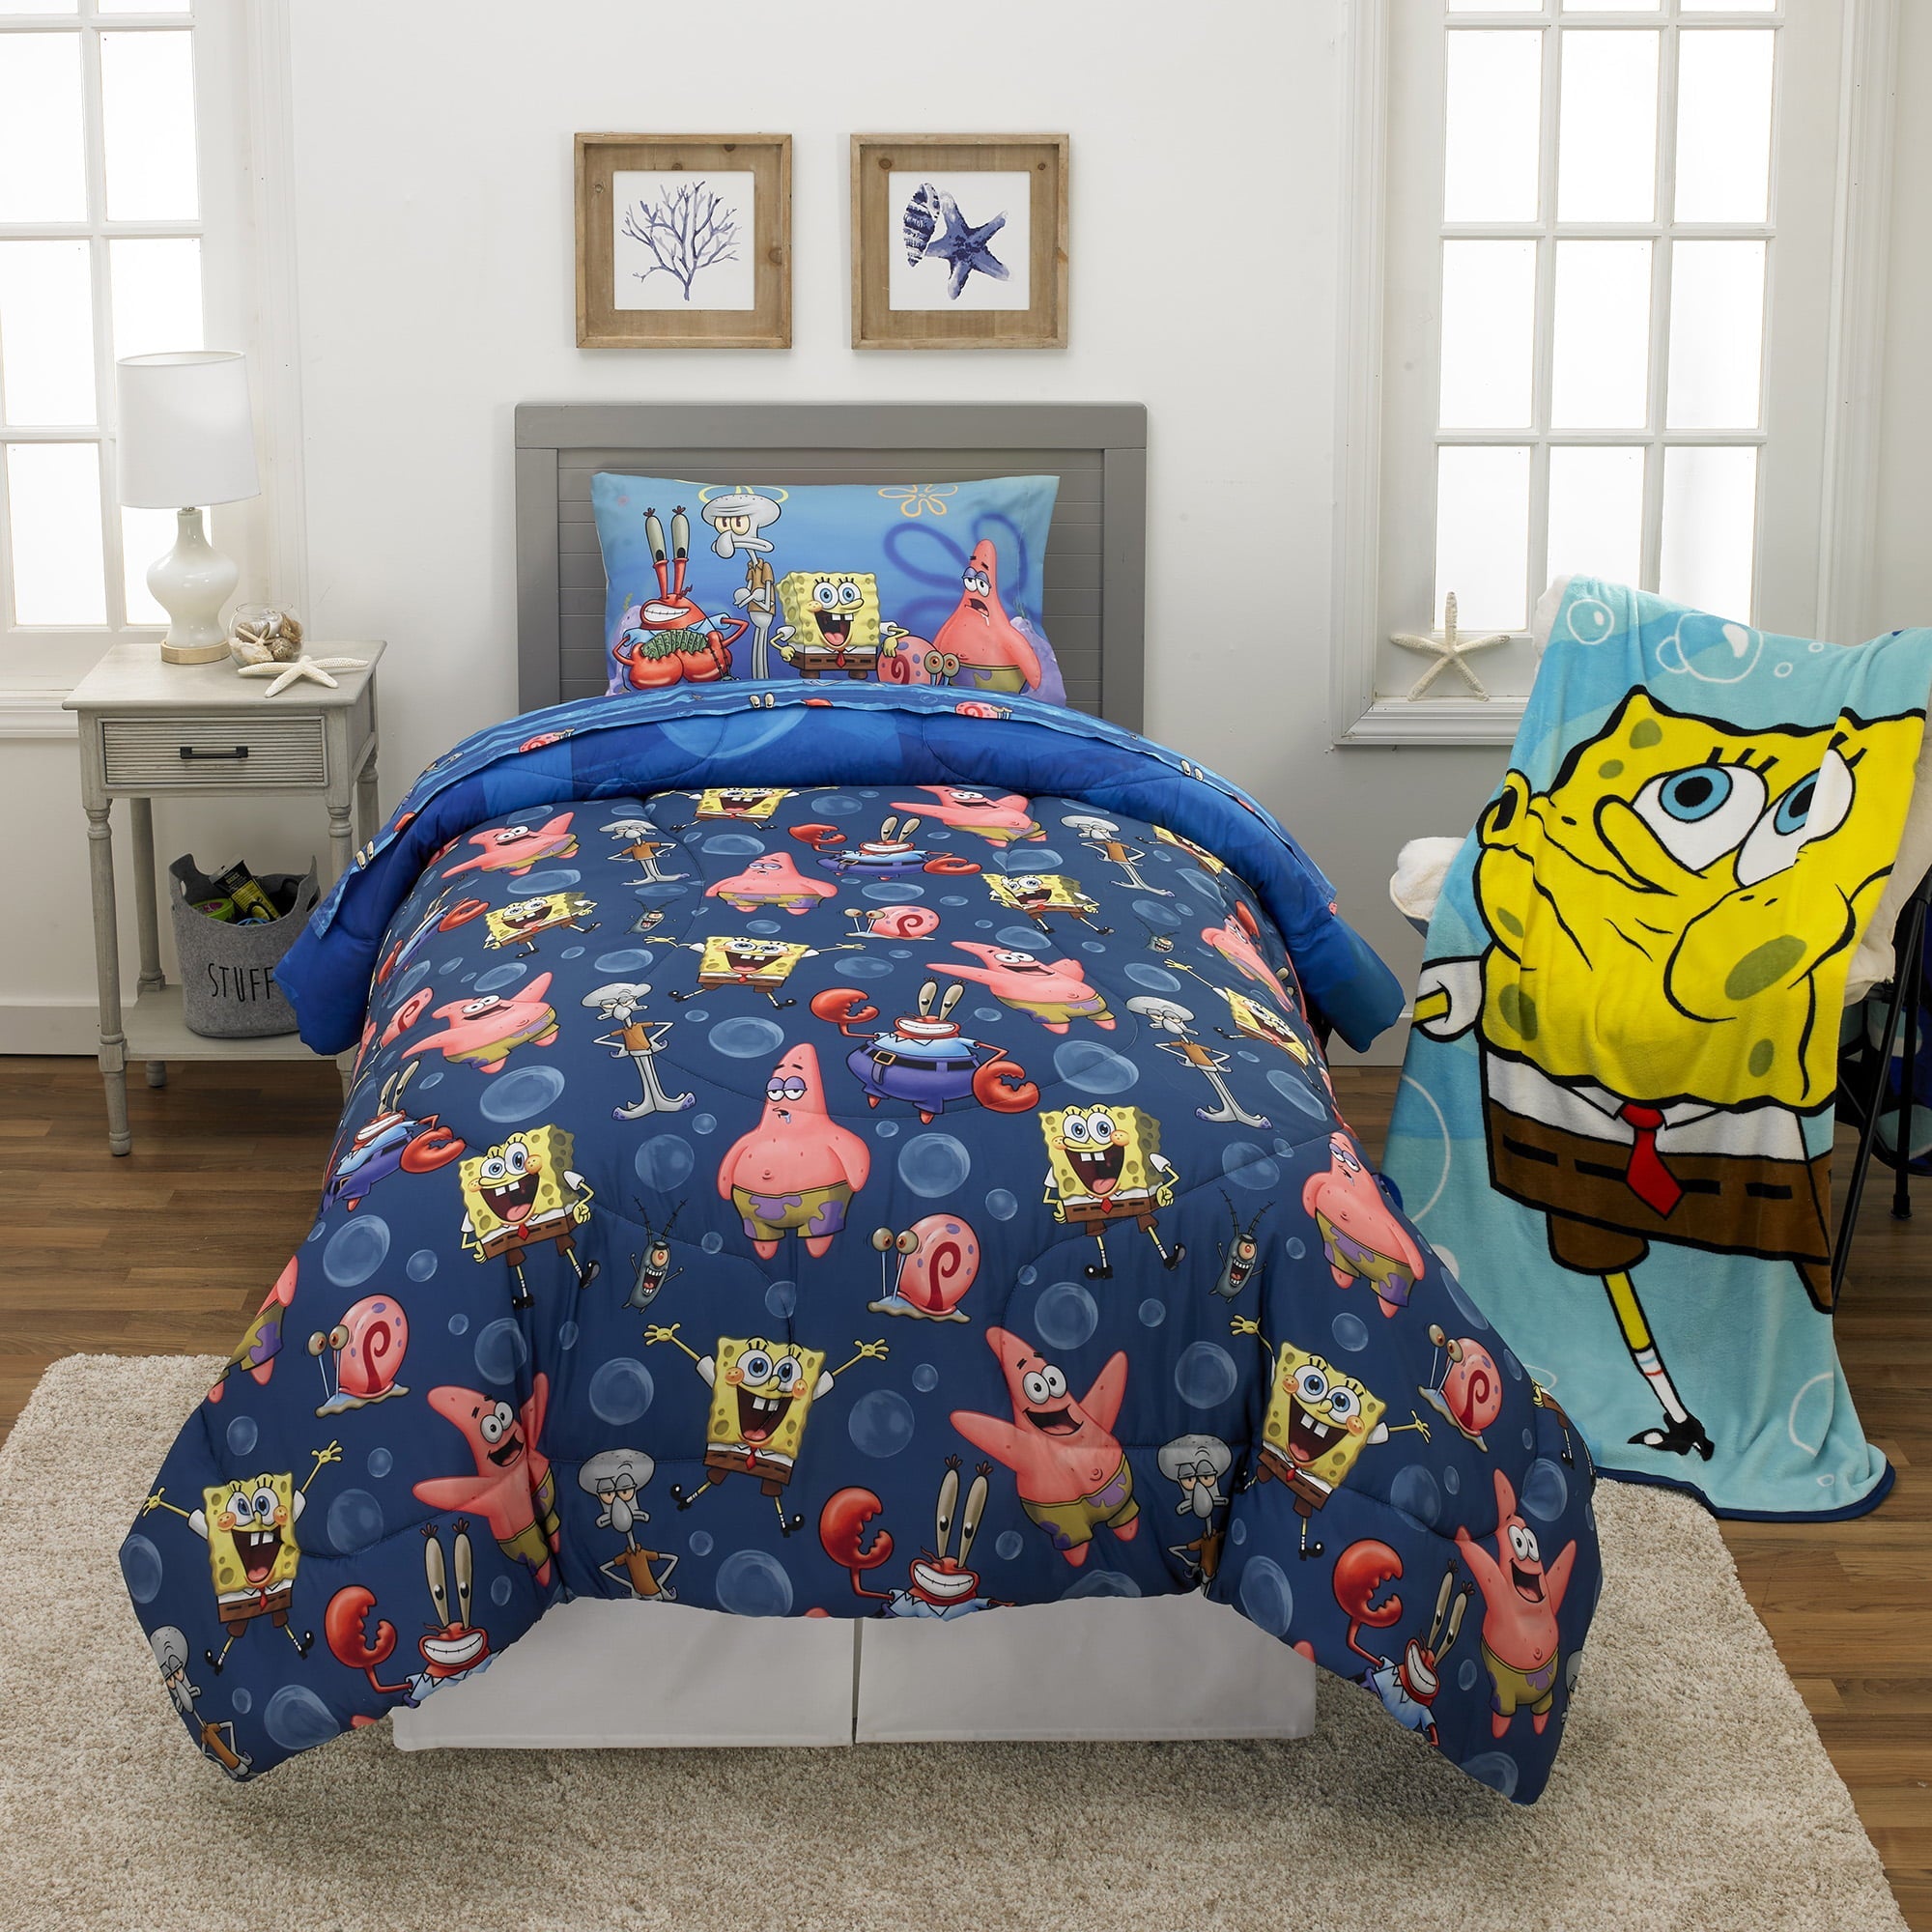 SpongeBob SquarePants Kids Twin Bed in a Bag, Comforter and Sheets, Blue, Nickelodeon